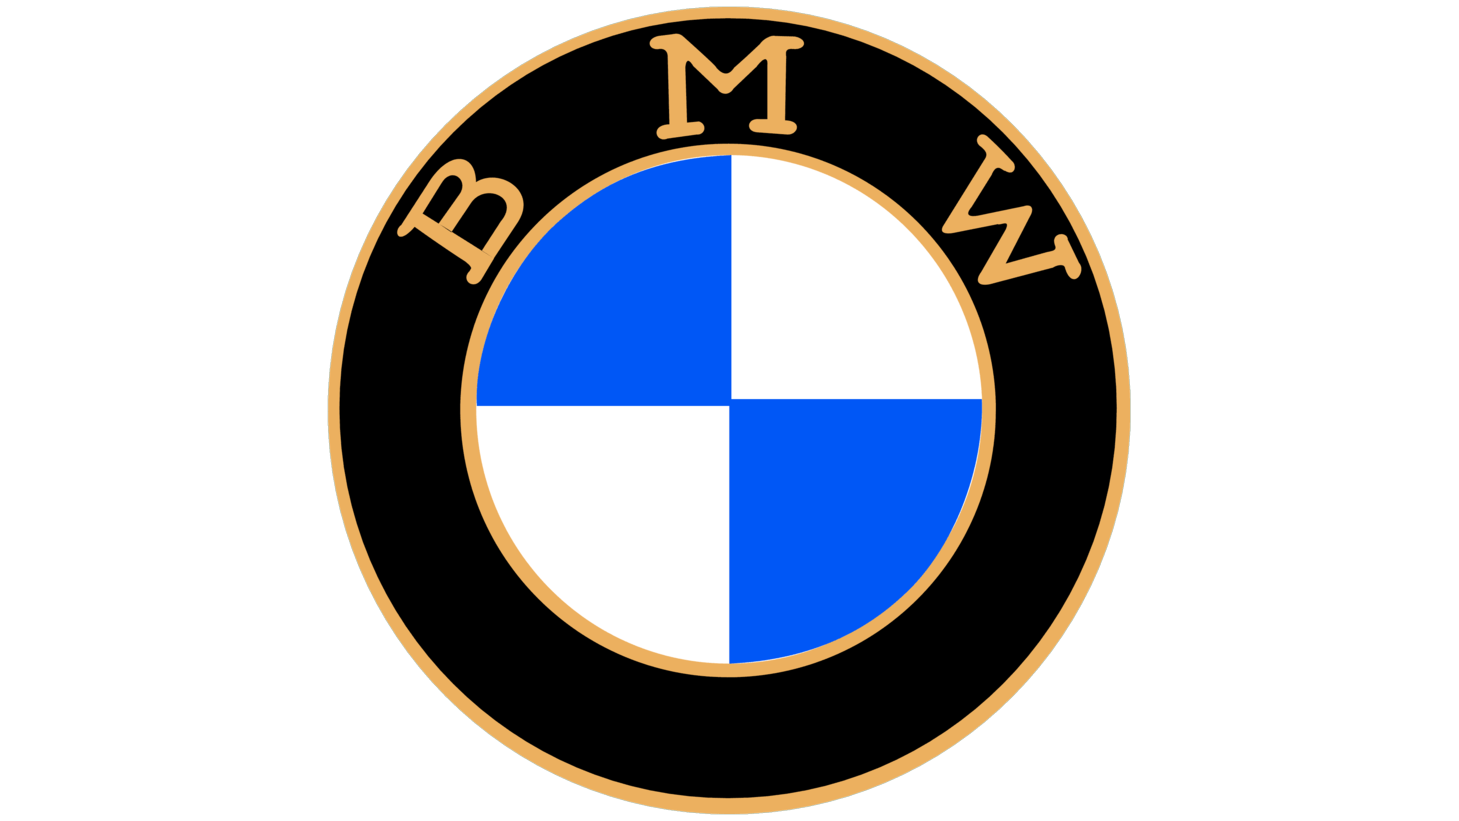 Bmw sign 1917 1936